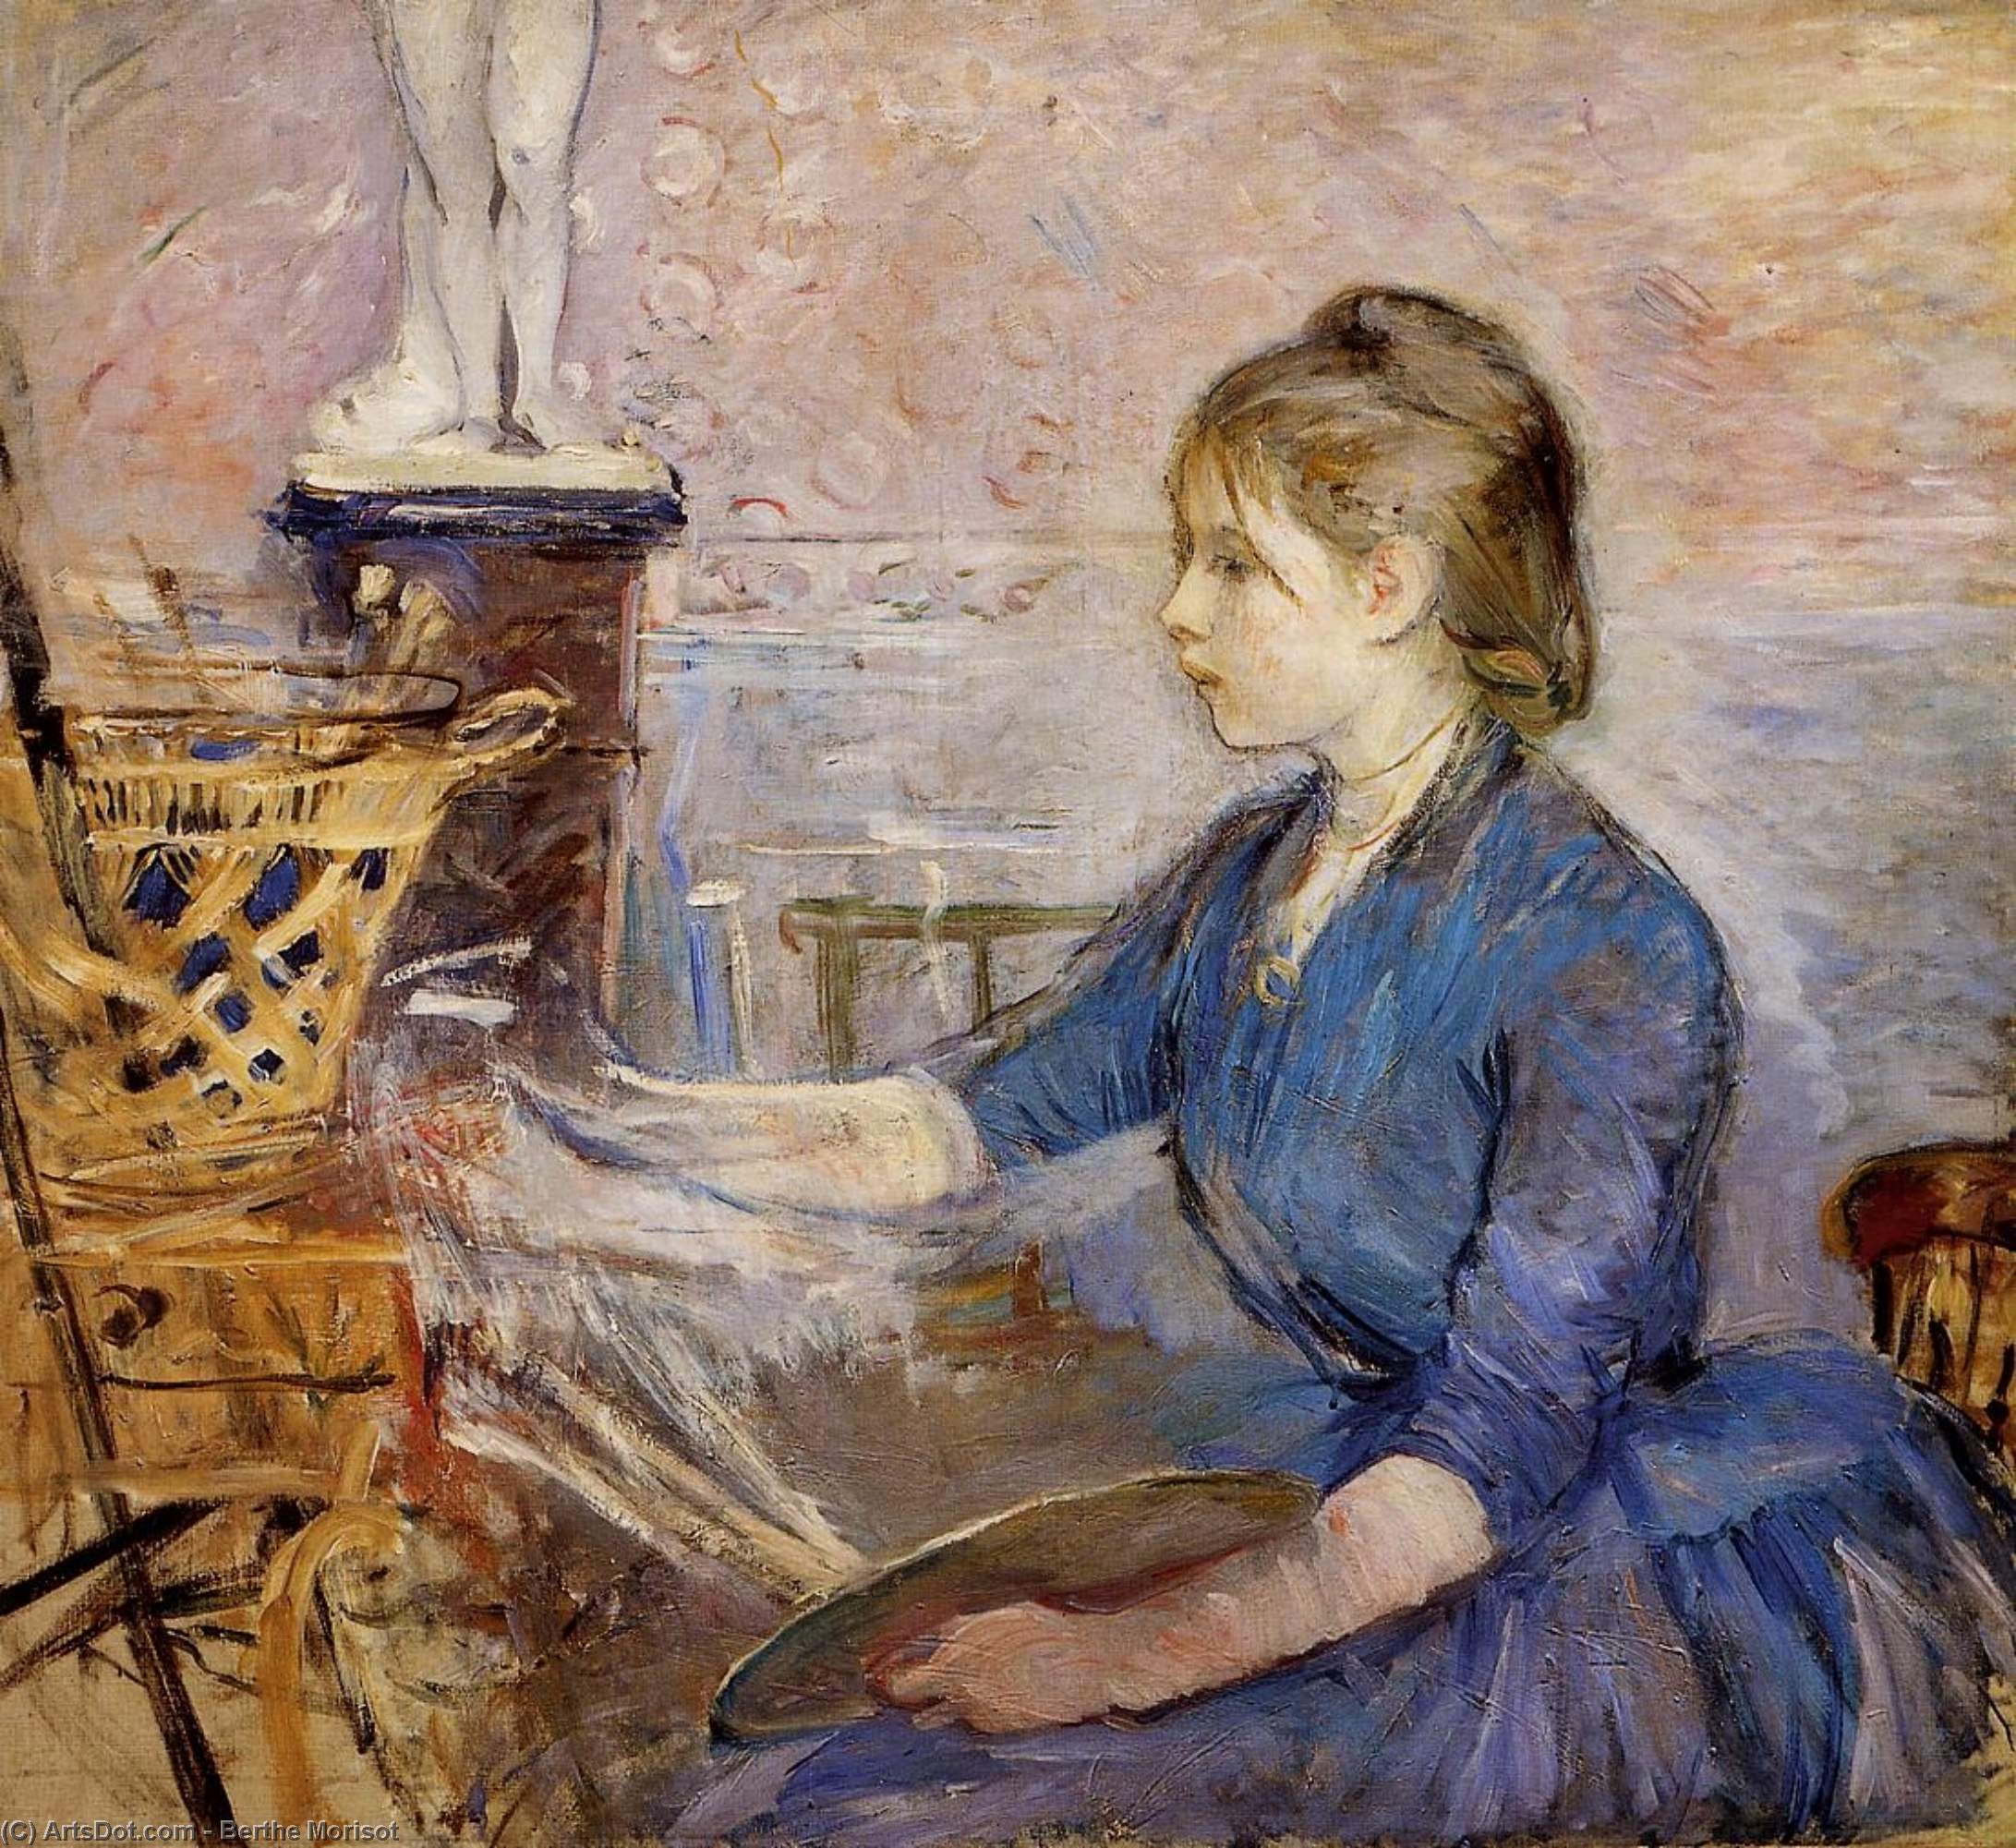 Compra Riproduzioni D'arte Del Museo Paule Gobillard Pittura, 1886 di Berthe Morisot (1841-1895, France) | ArtsDot.com